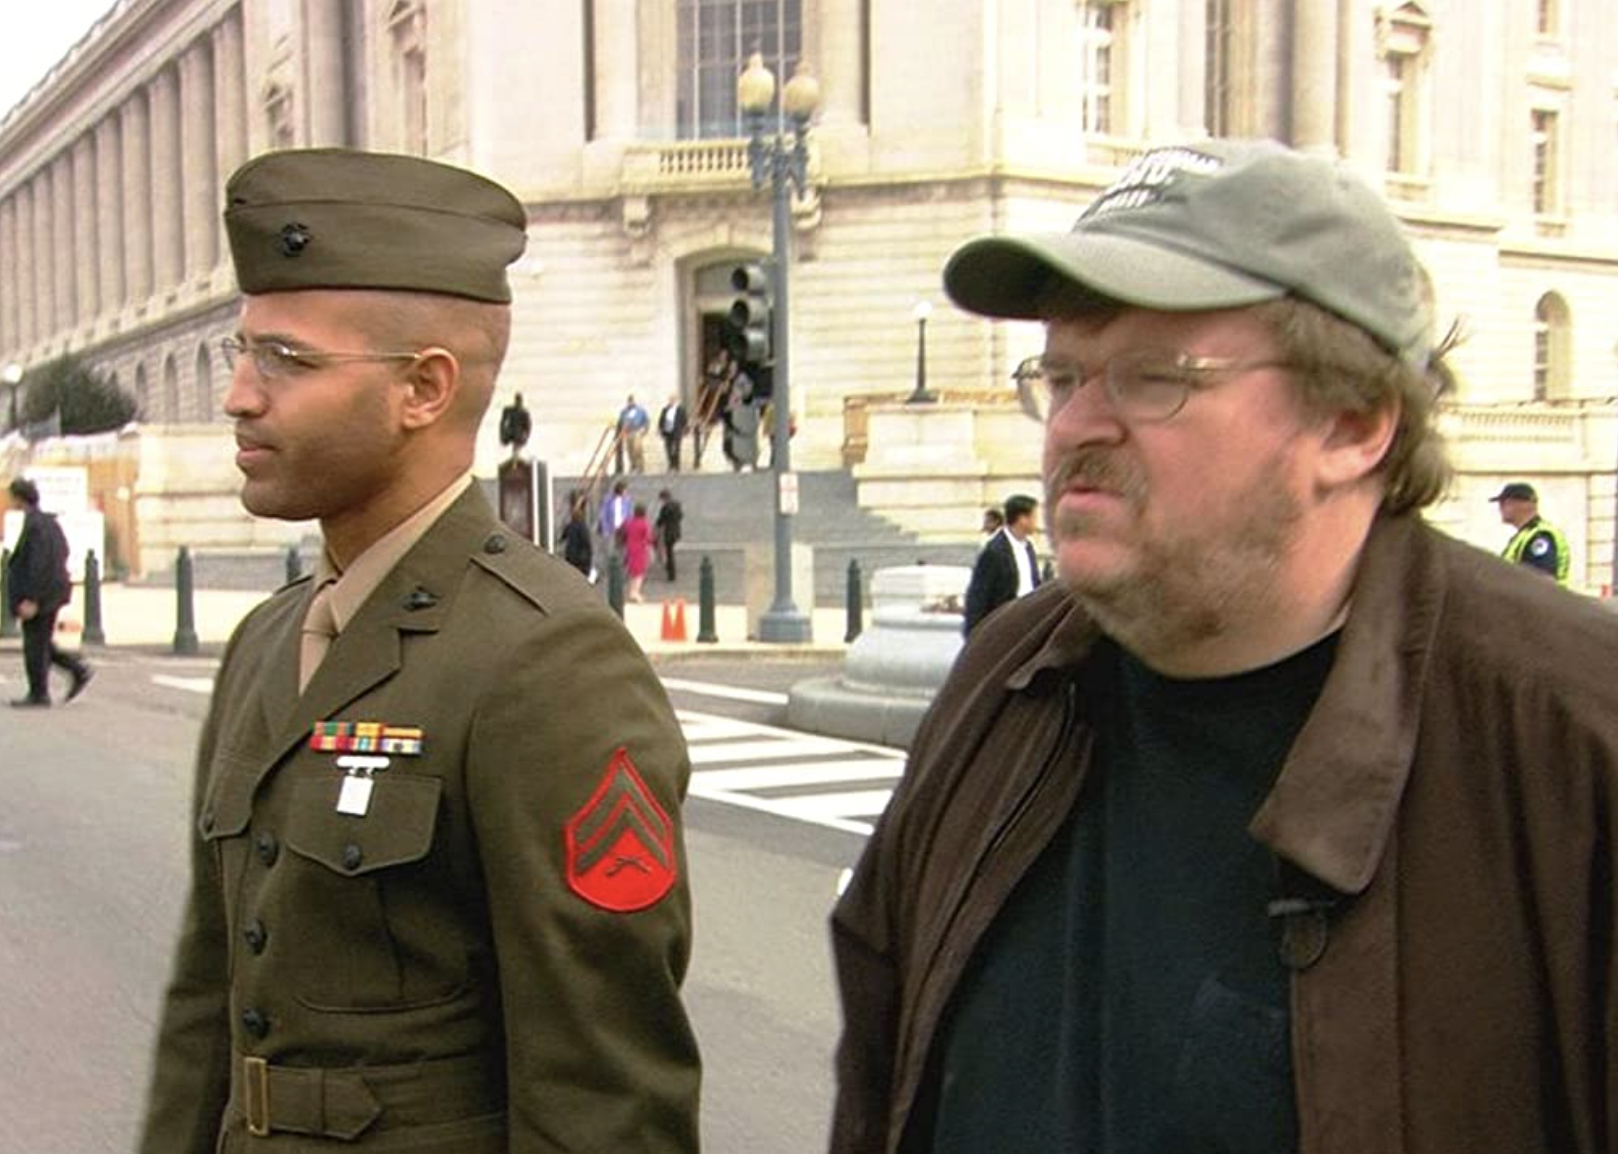 Michael Moore and Abdul Henderson in "Fahrenheit 9/11".